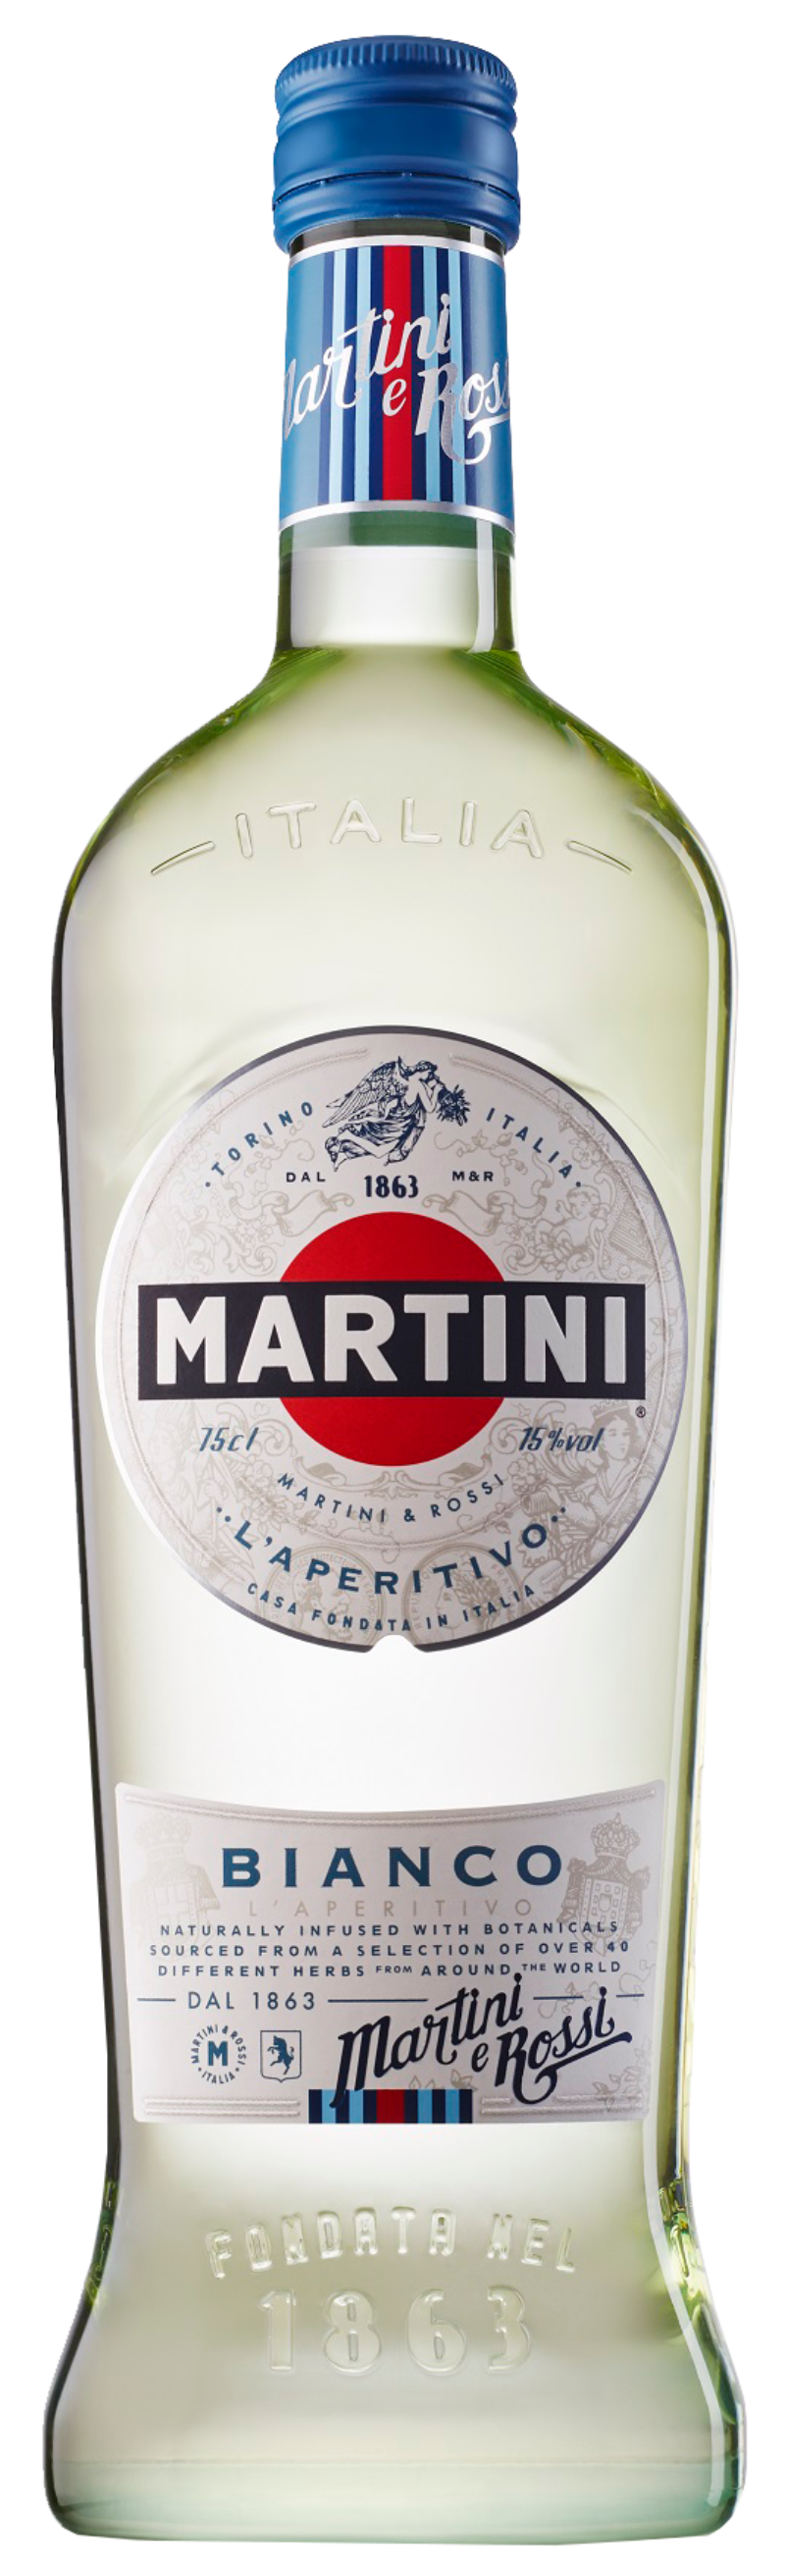 How to Martini Bianco 